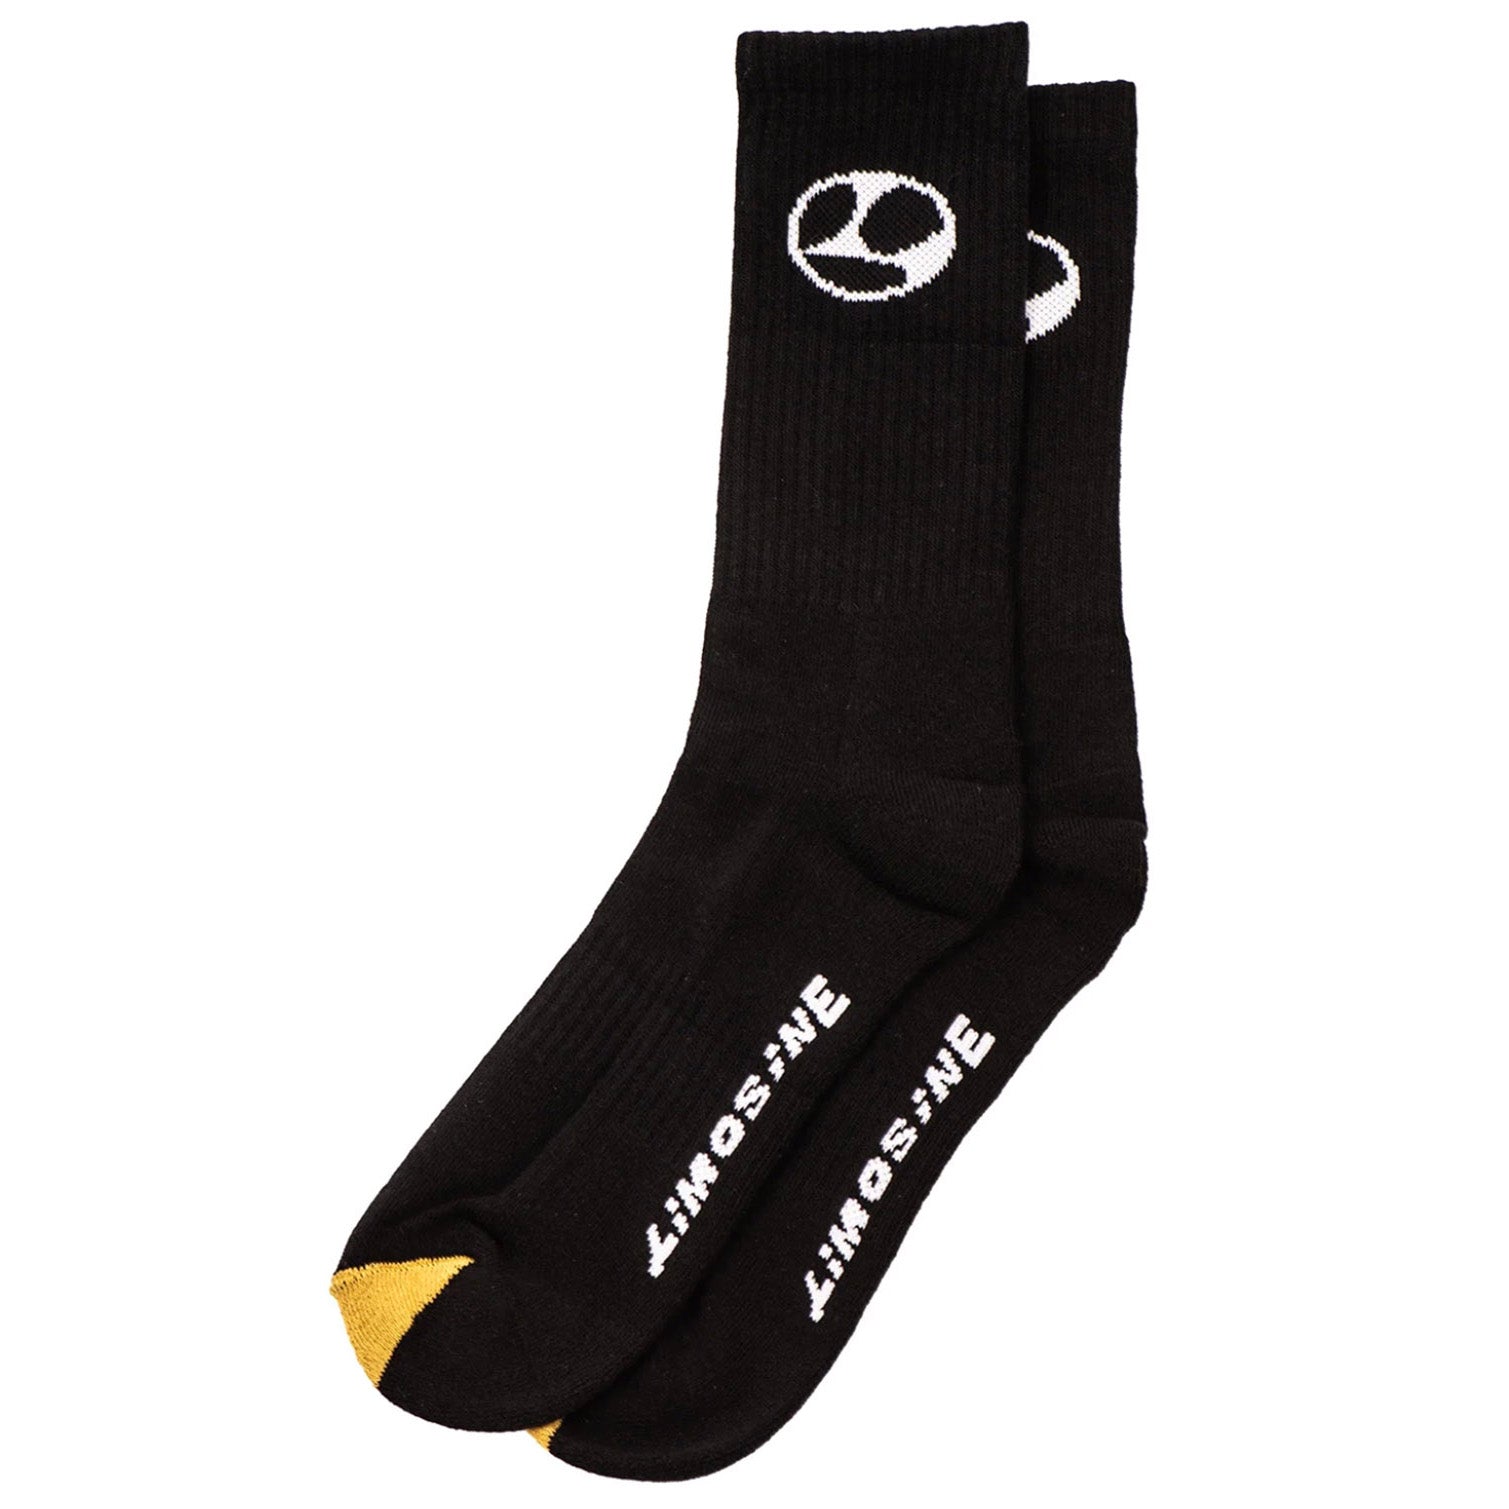 Limosine Gold Toe Socks Black